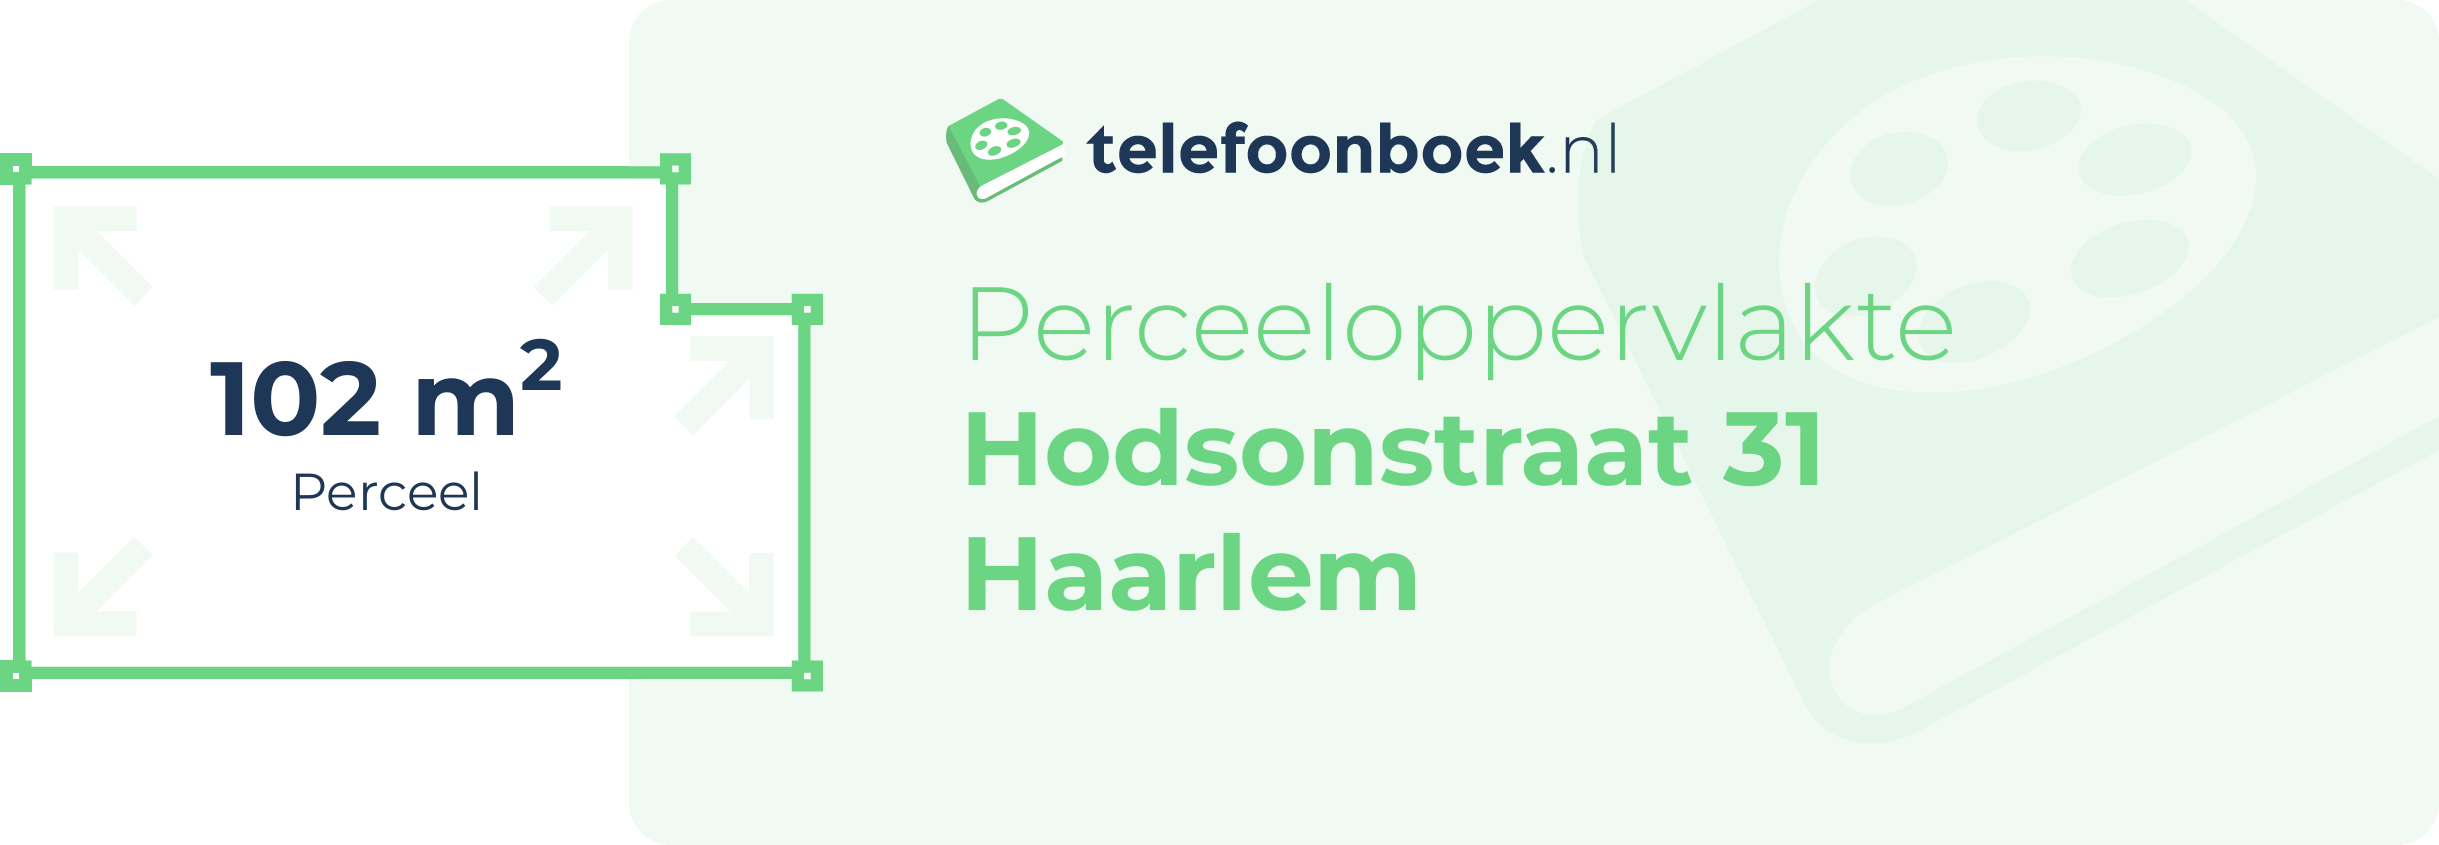 Perceeloppervlakte Hodsonstraat 31 Haarlem